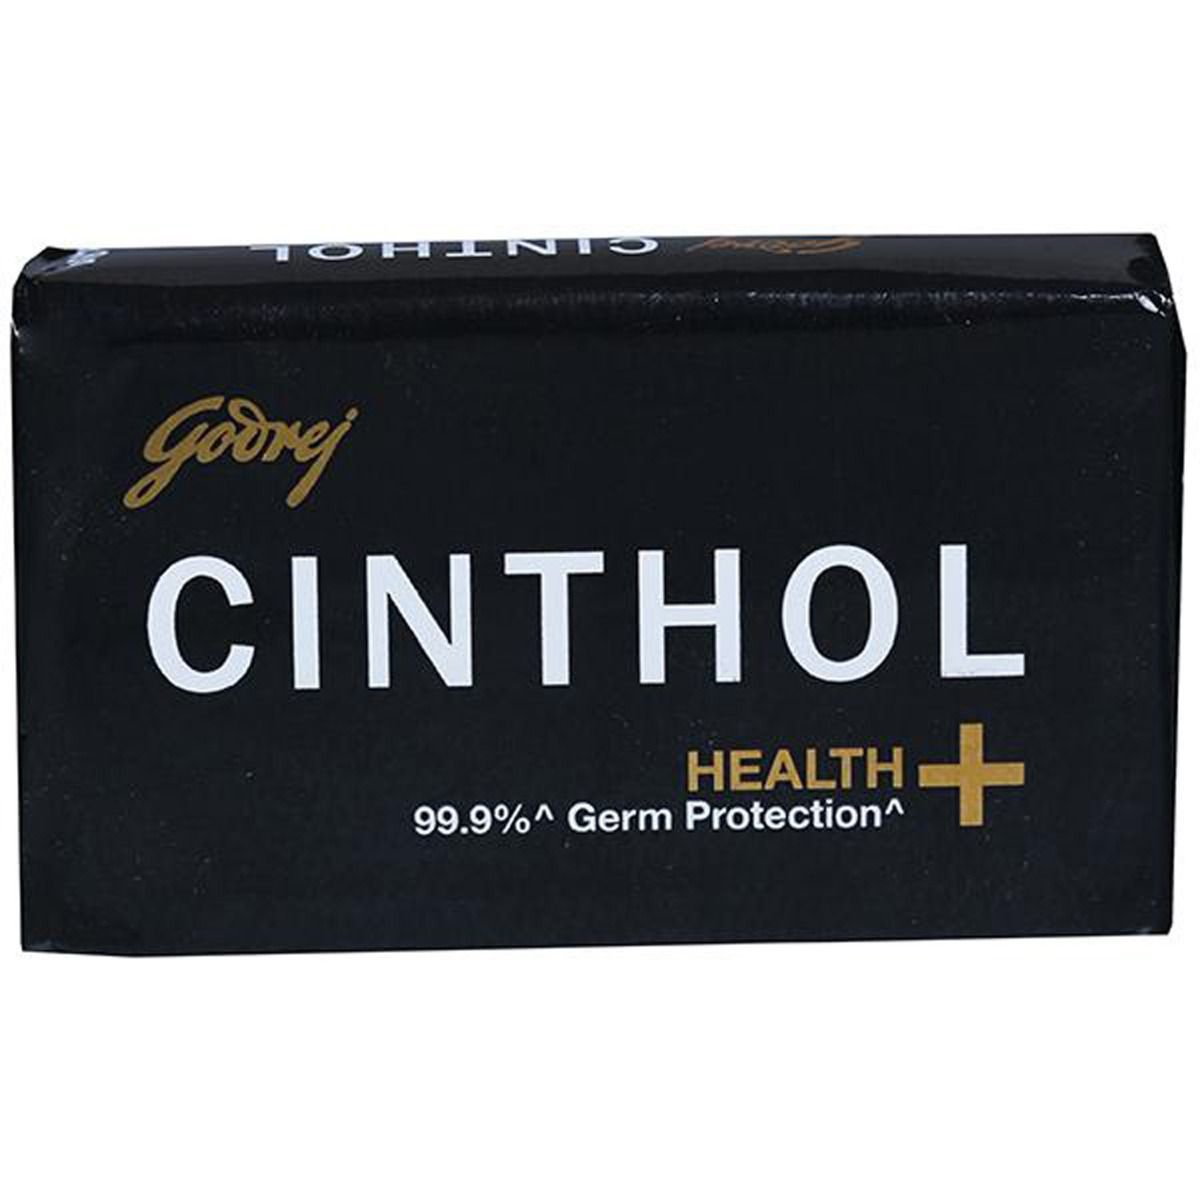 Buy Cinthol Health Plus Soap, 100 gm Online